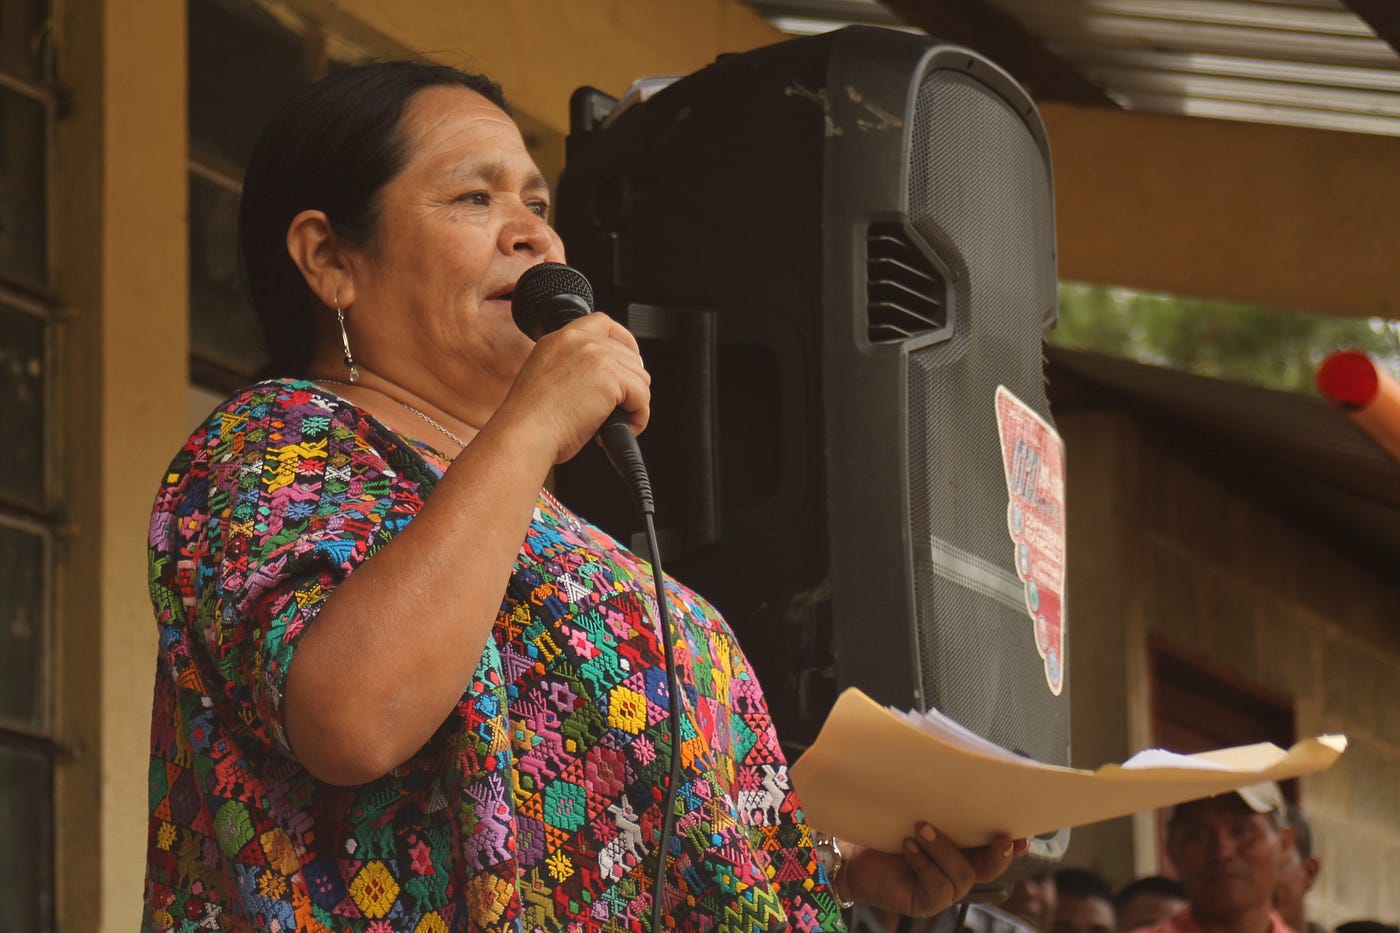 Renace Guatemala on X: Hidroeléctrica Renace informa